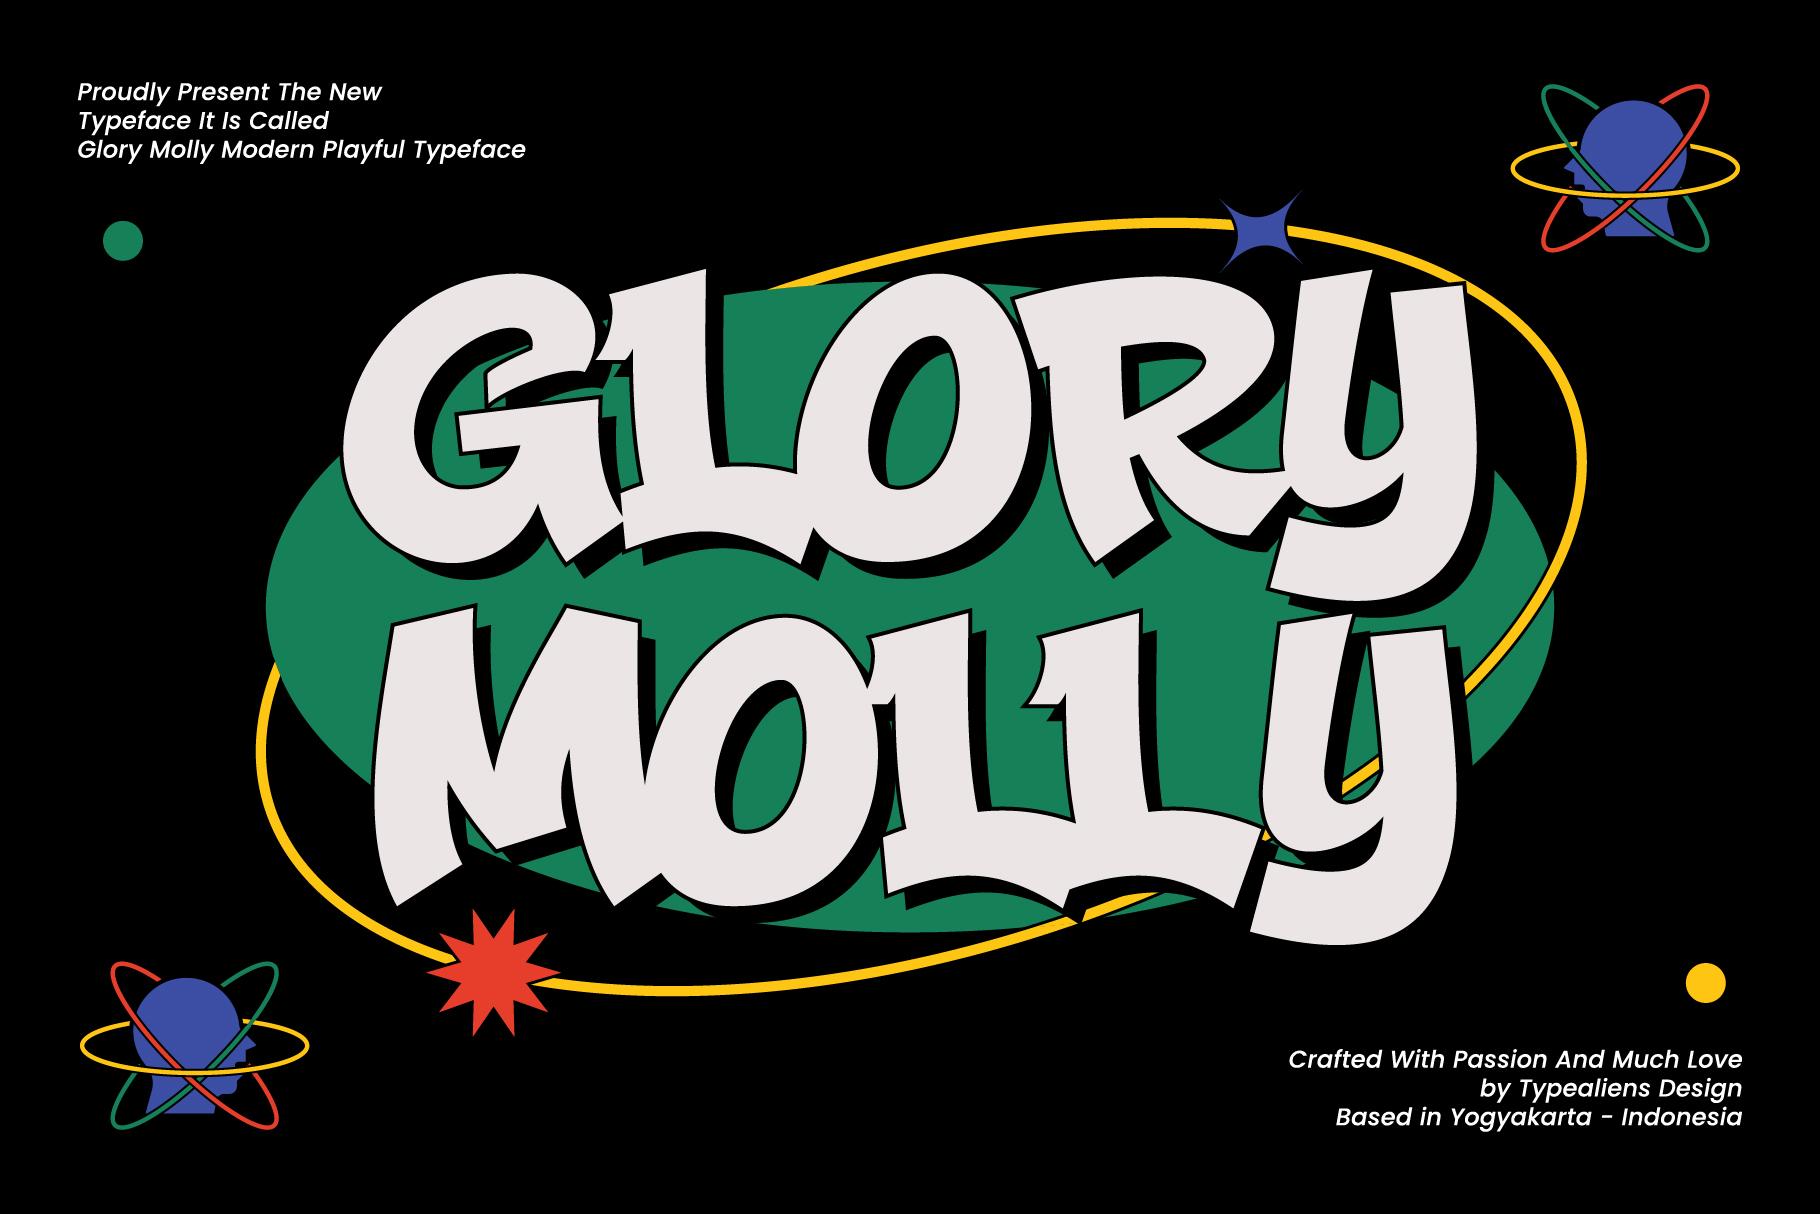 Glory Molly Font